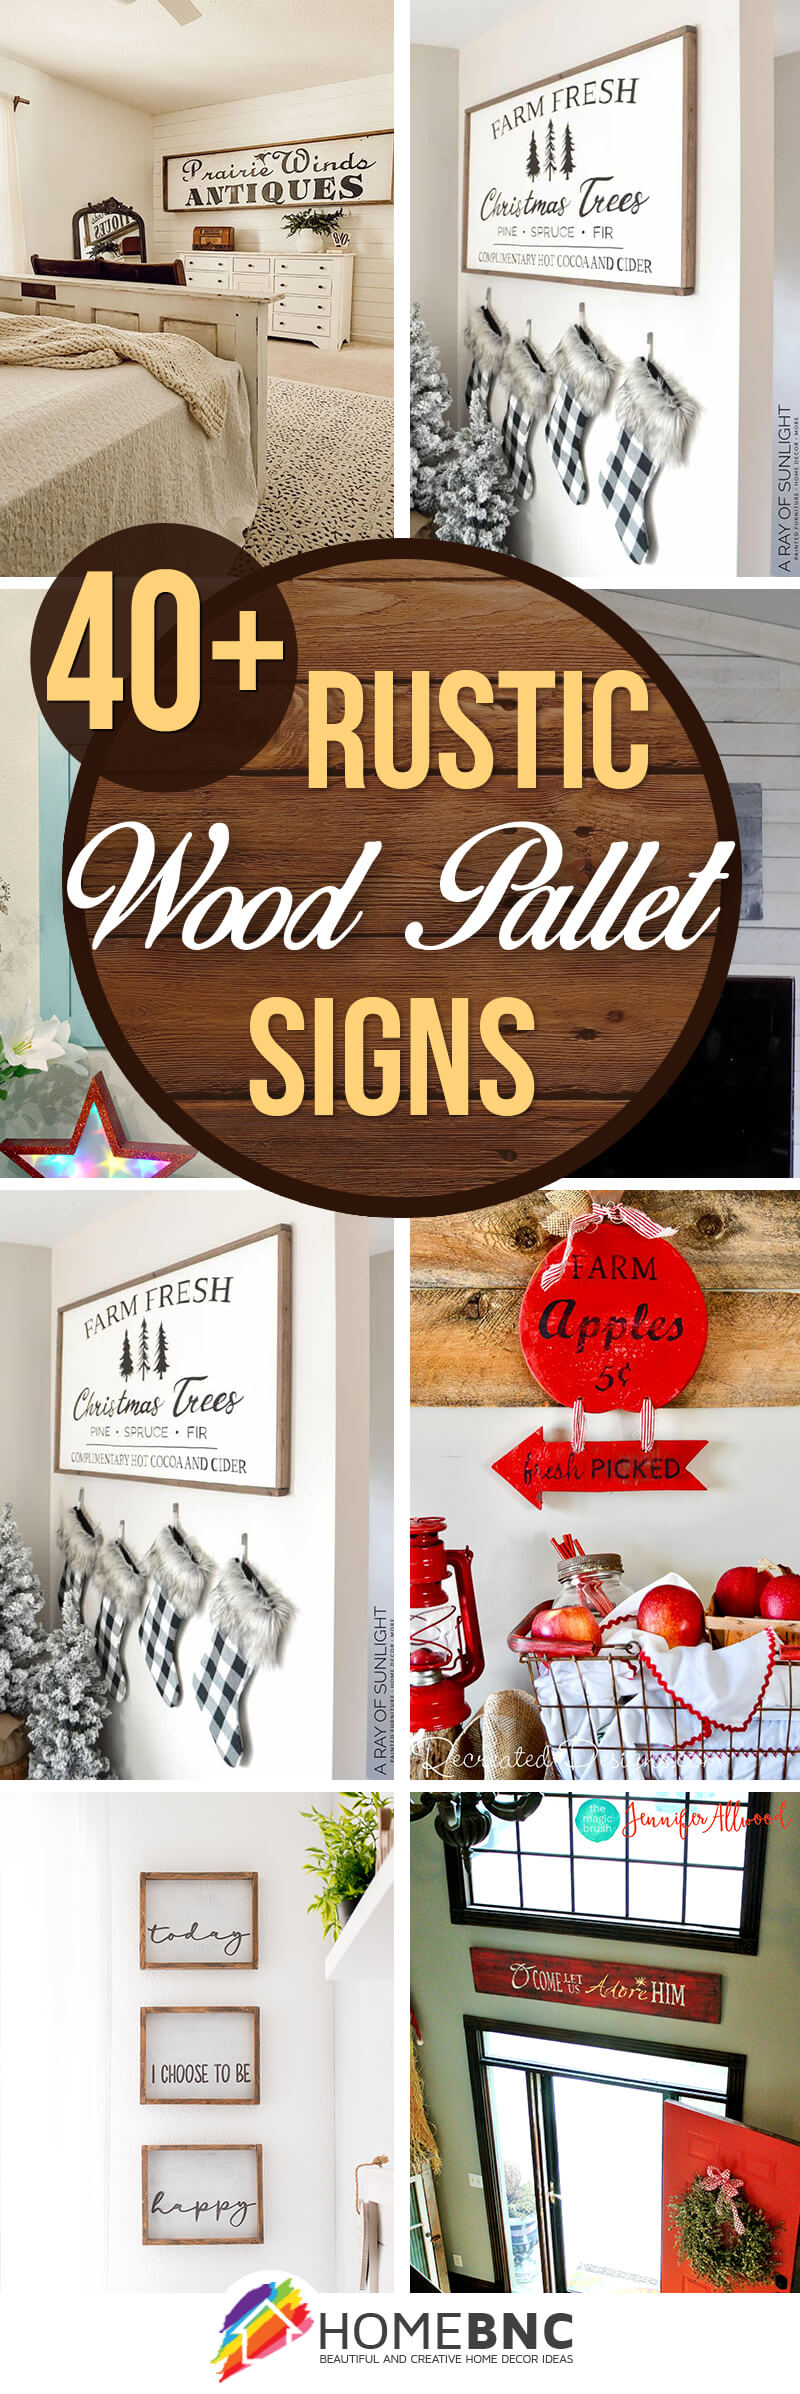 Wood Sign Ideas